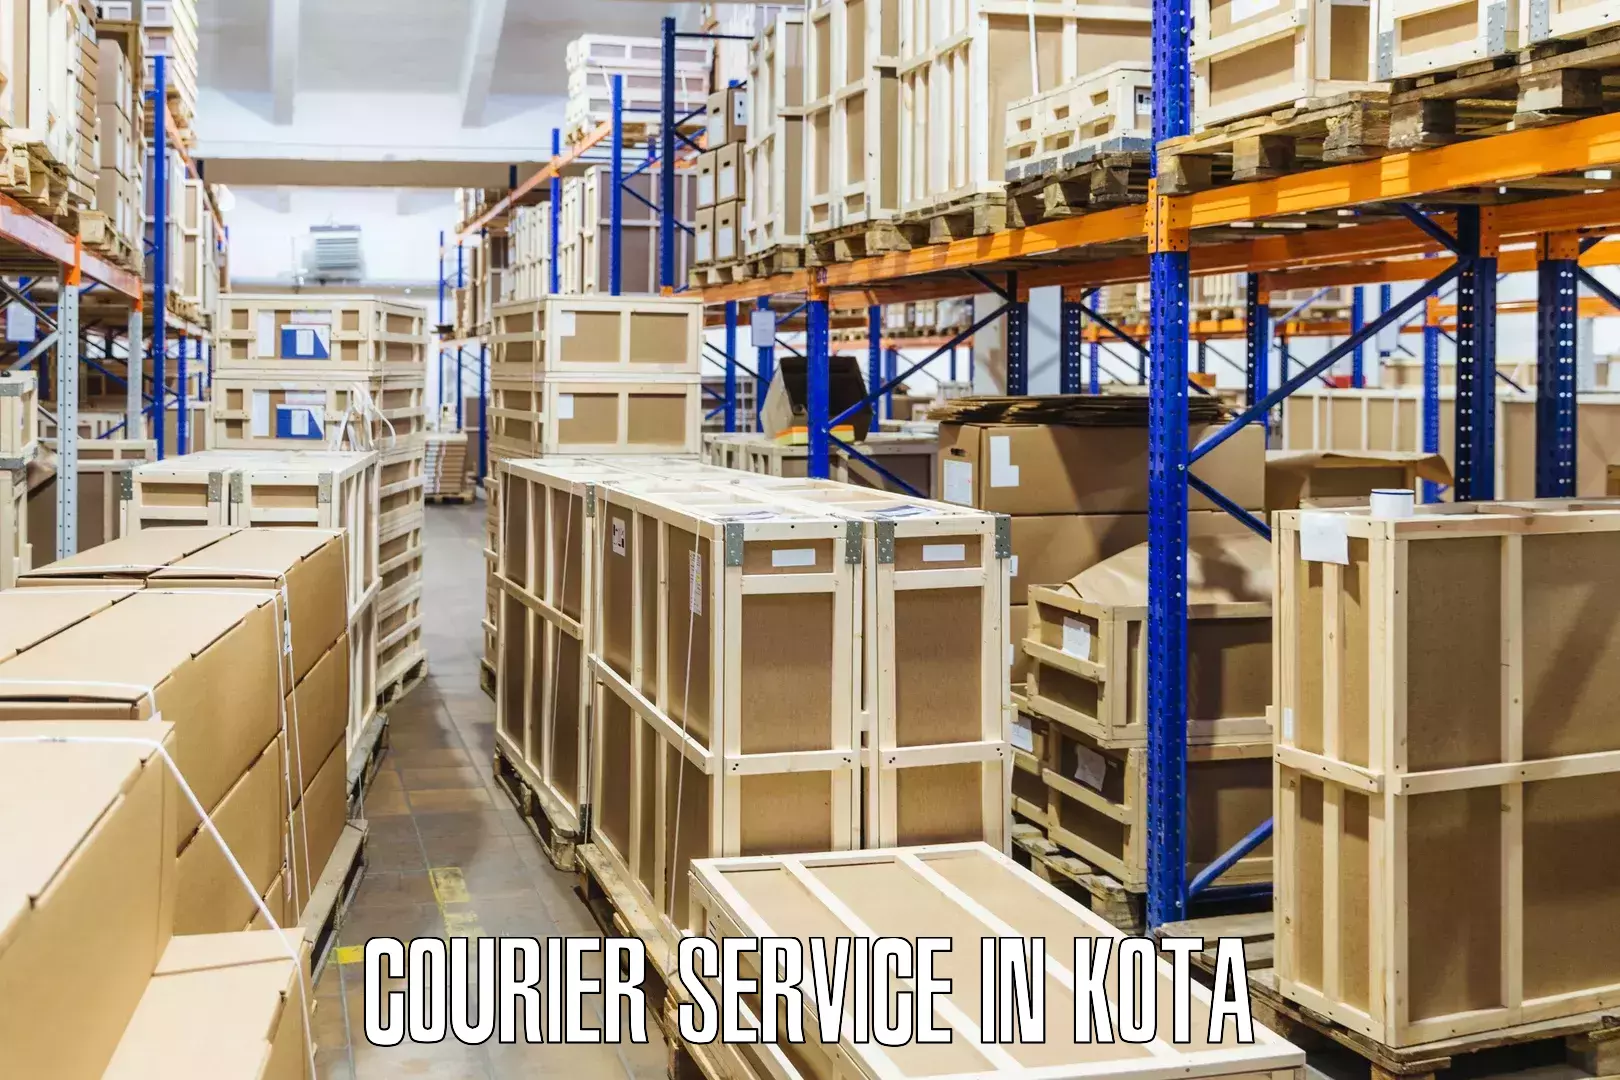 Smart shipping technology in Kota